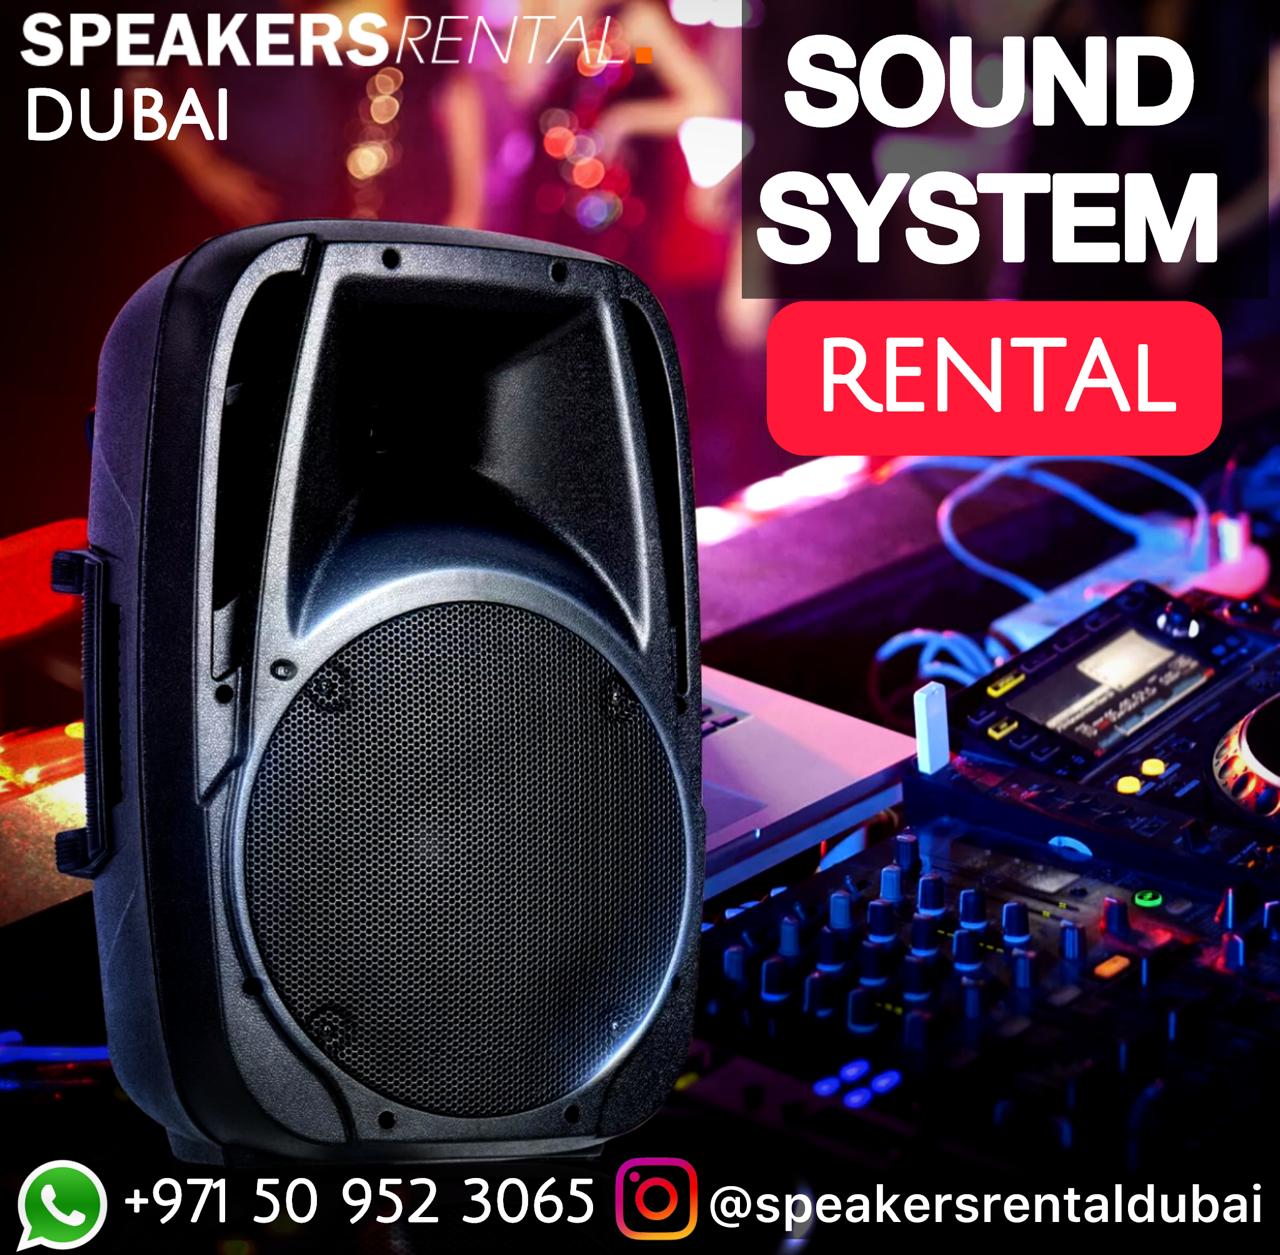 Sound System Rental in Dubai | Best Speaker Rental in UAE Dubai |